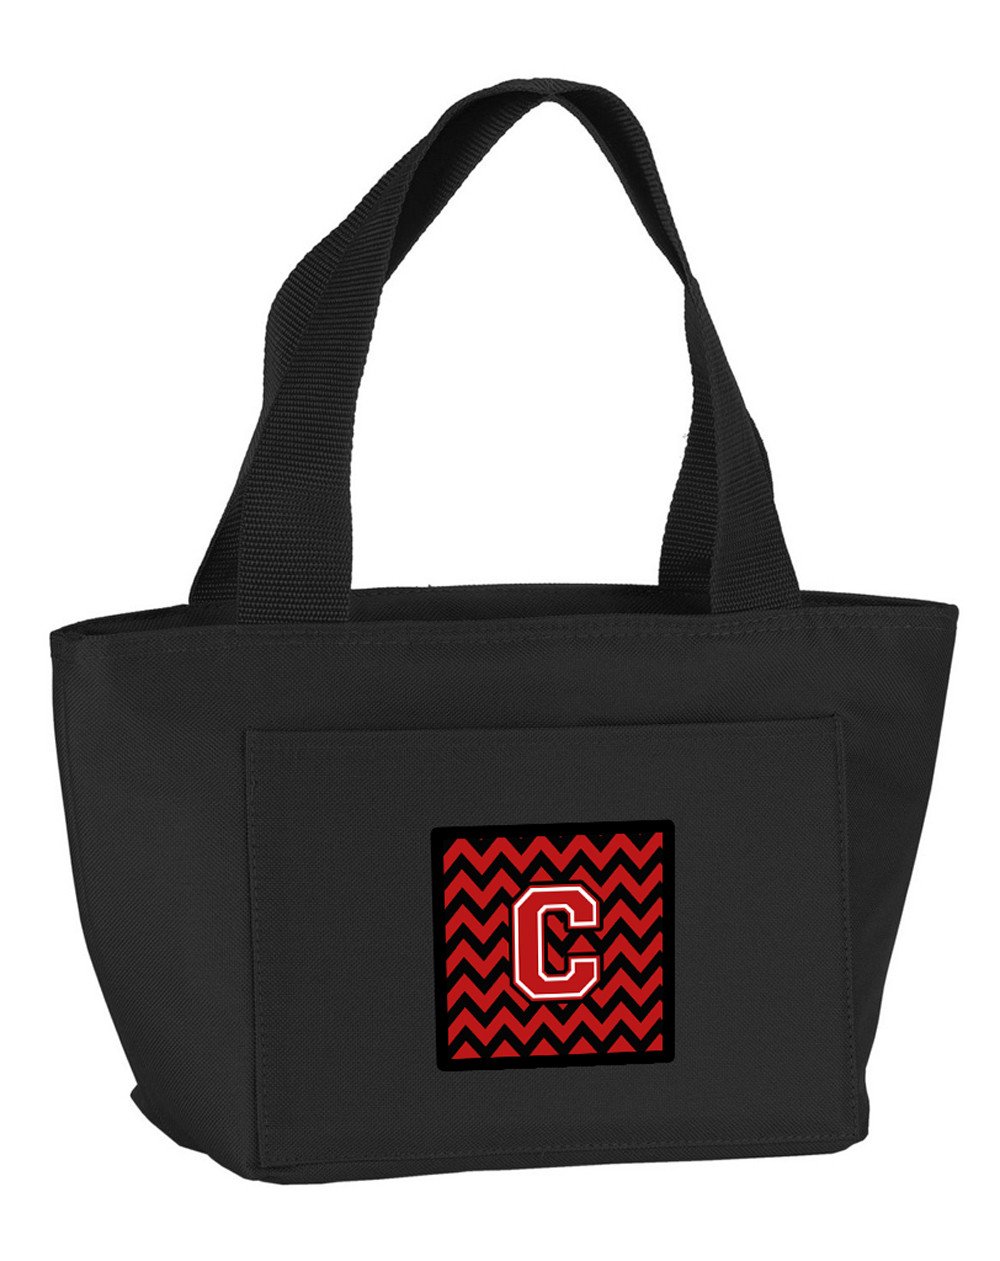 Letter C Chevron Black and Red   Lunch Bag CJ1047-CBK-8808 by Caroline's Treasures